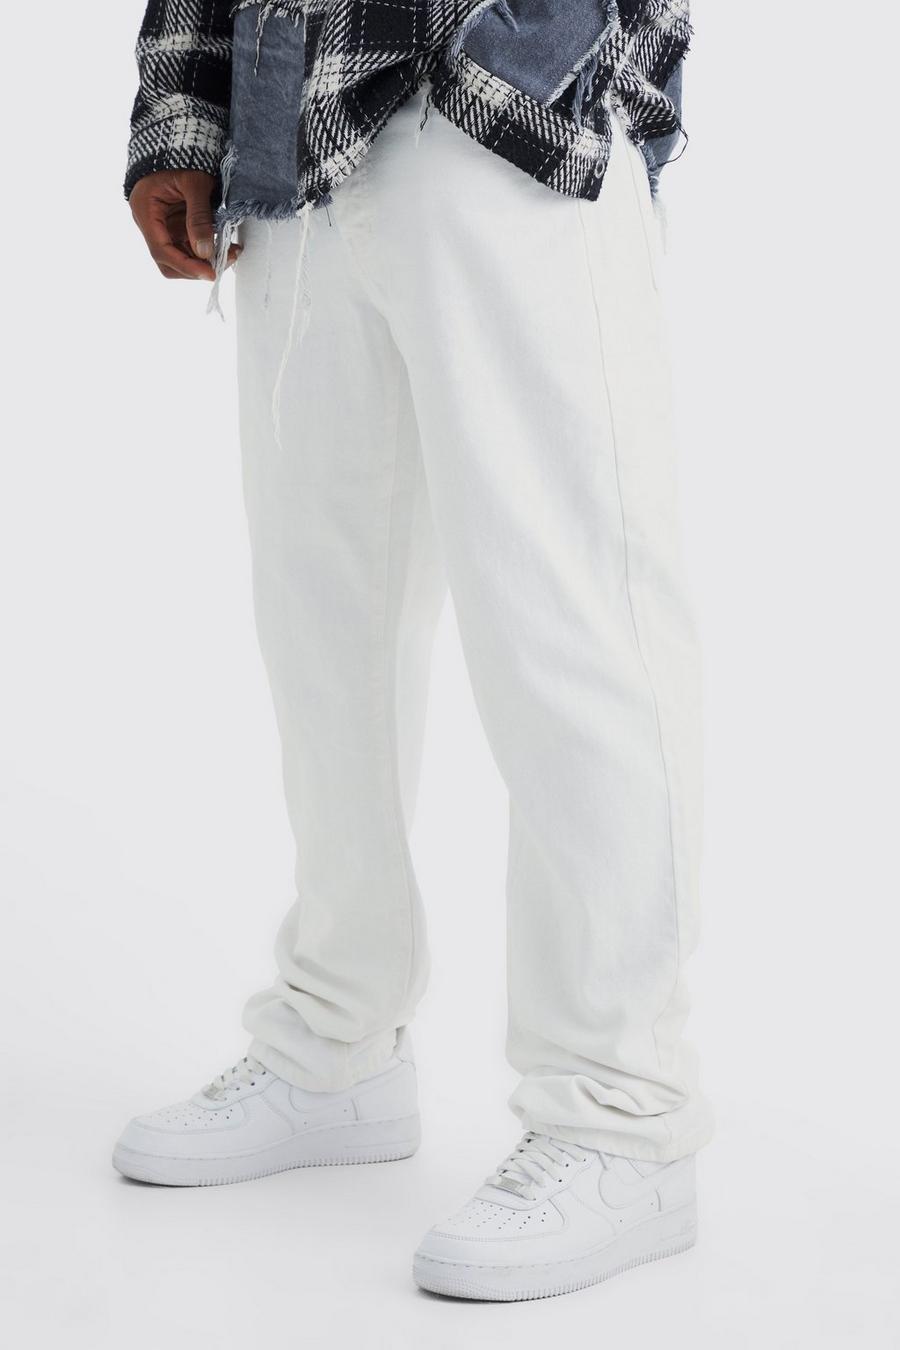 Jeans rilassati in denim rigido, White bianco